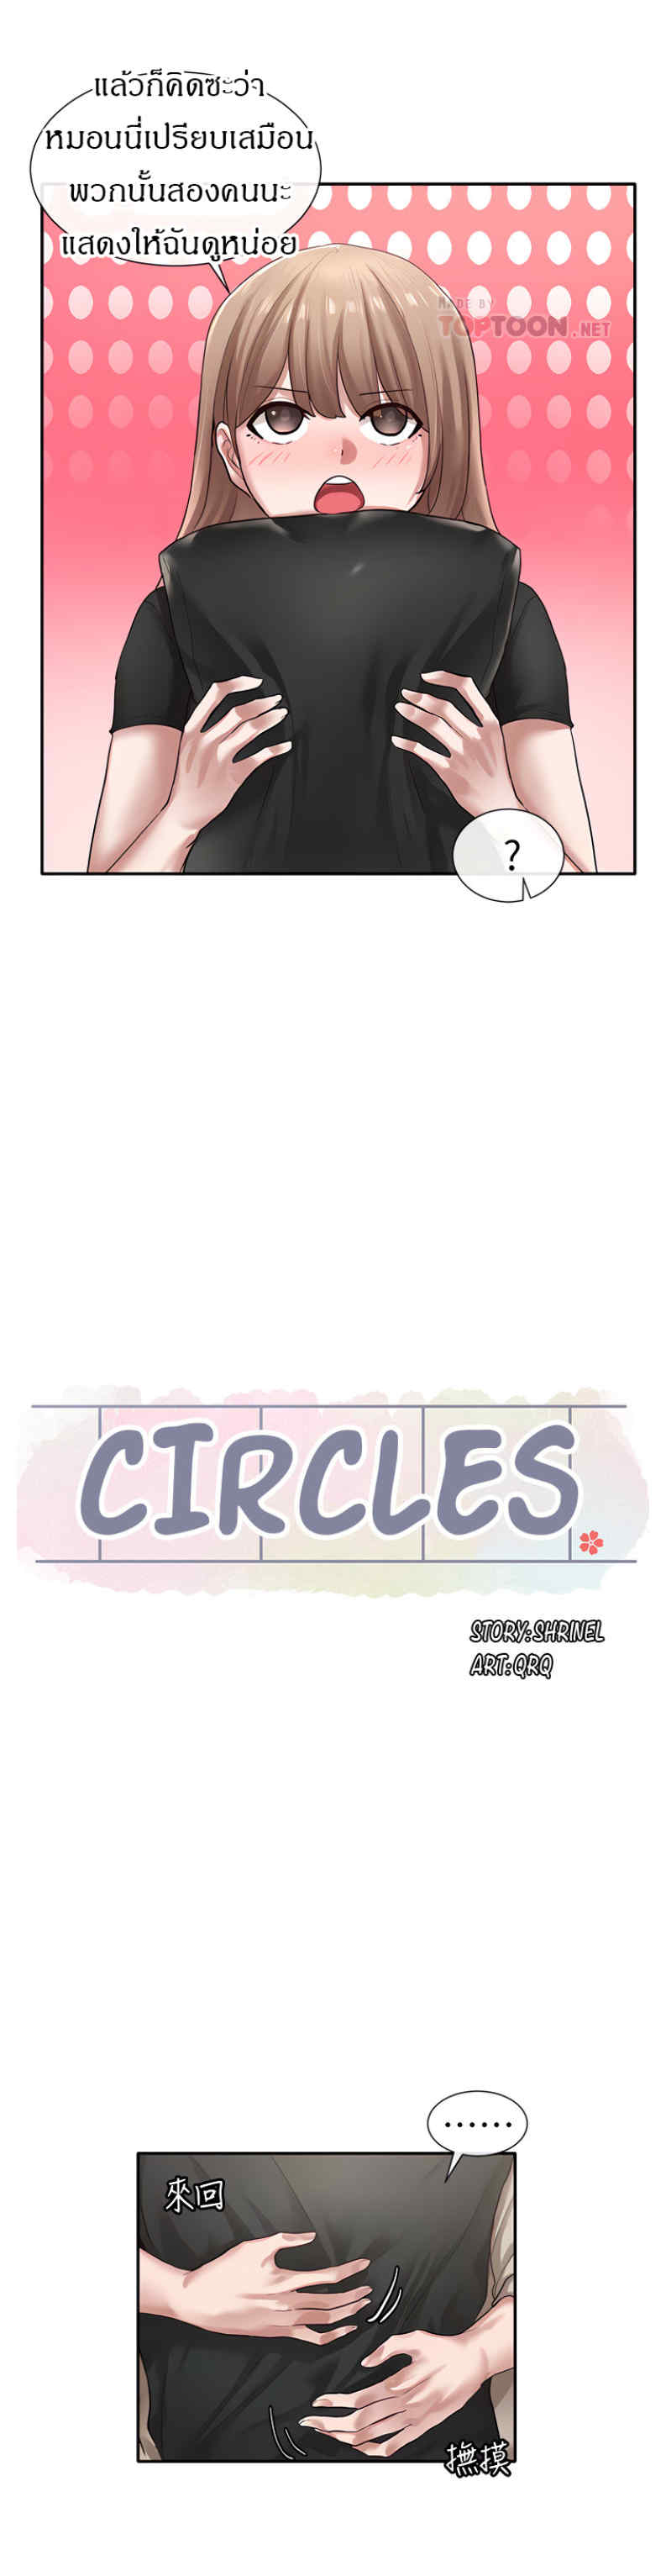 Theater Society (Circles) 33 18